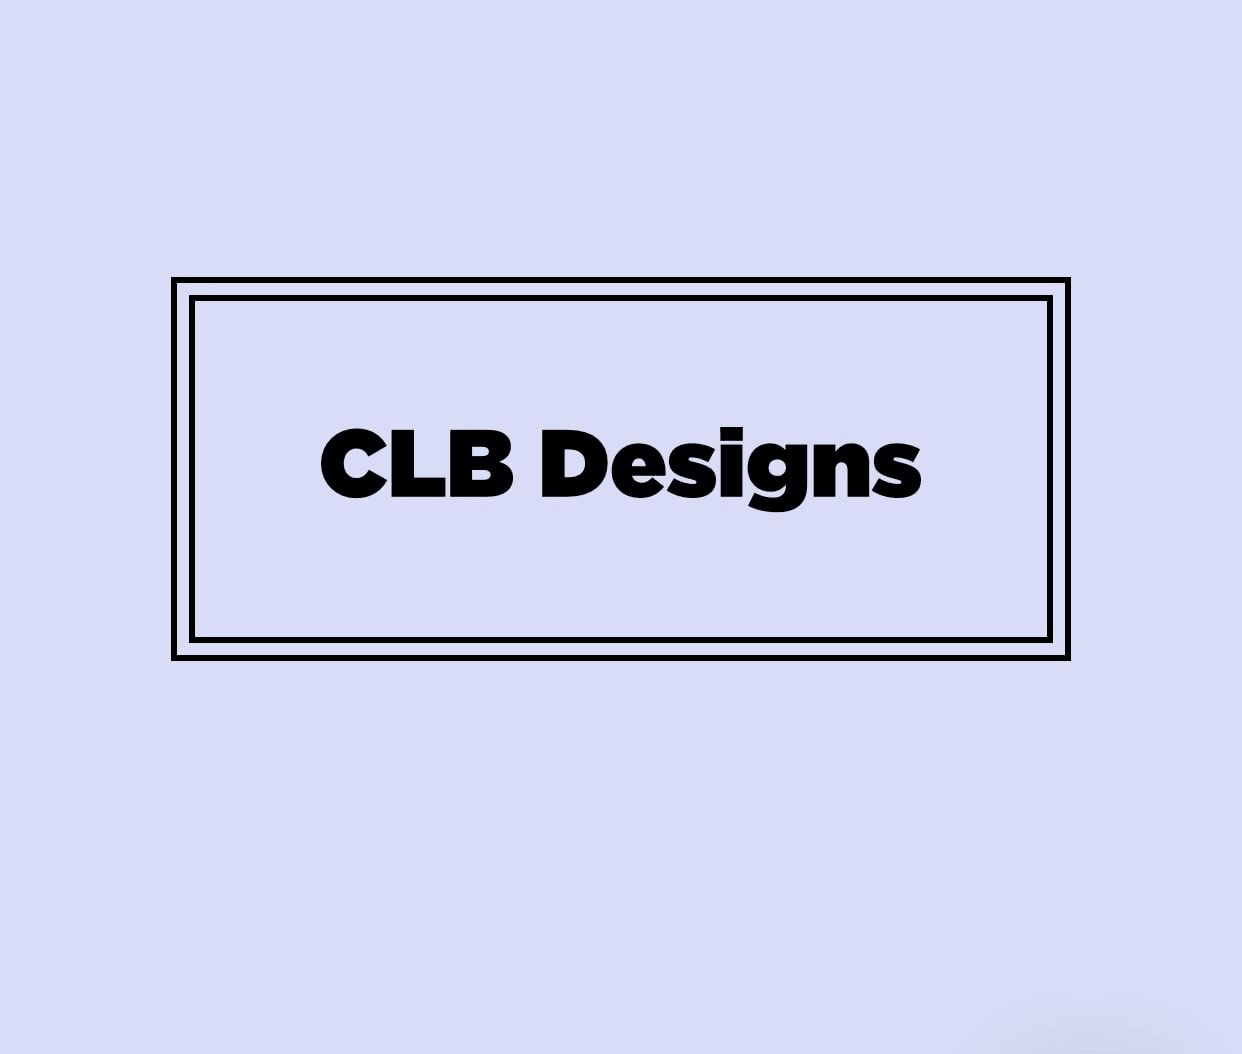 CLB Designs